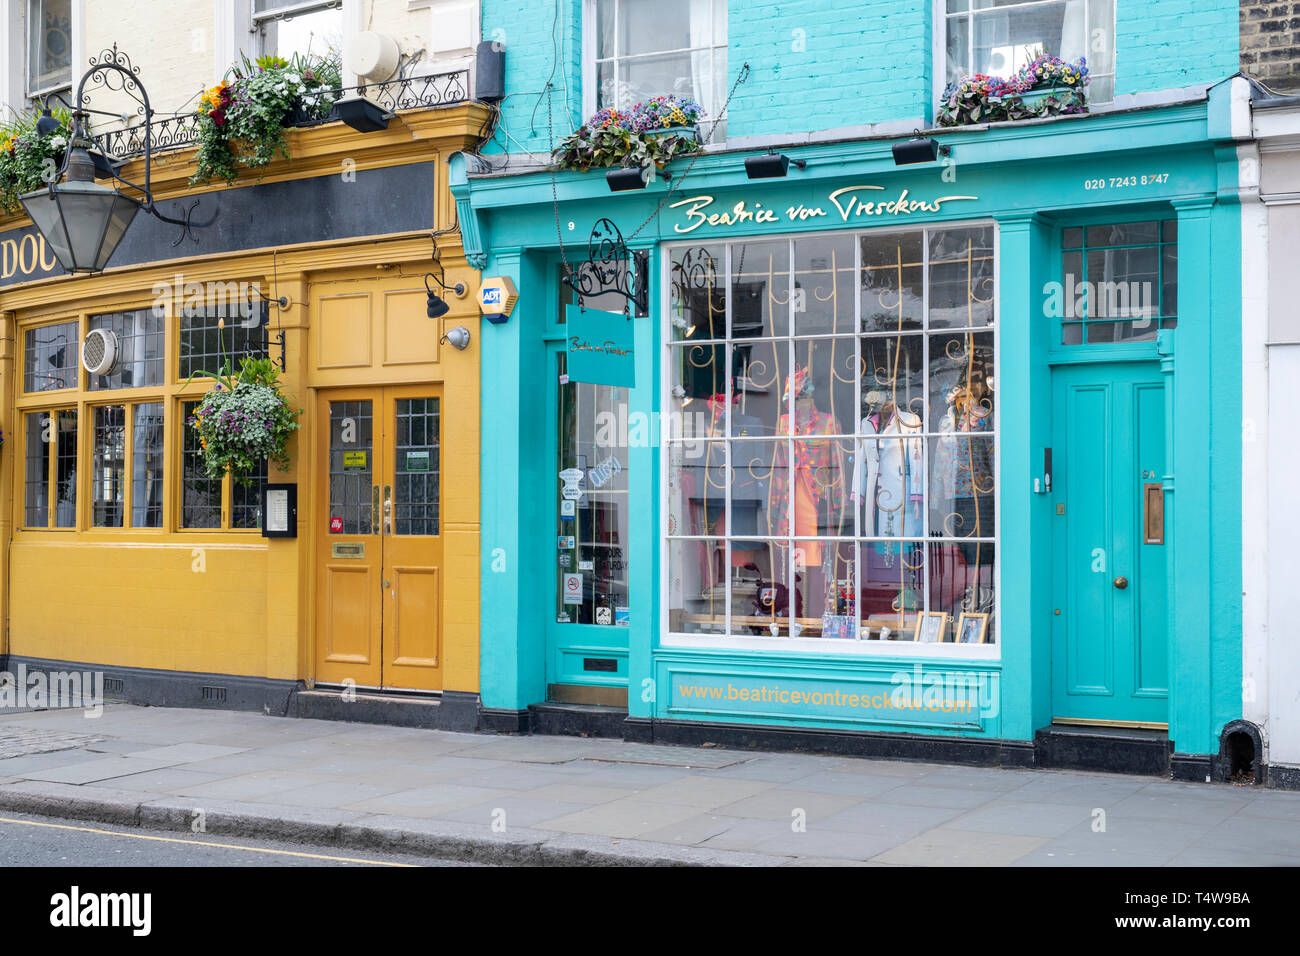 Beatrice von tresckow Shop entlang der Portobello Road. Notting Hill, West London. Großbritannien Stockfoto